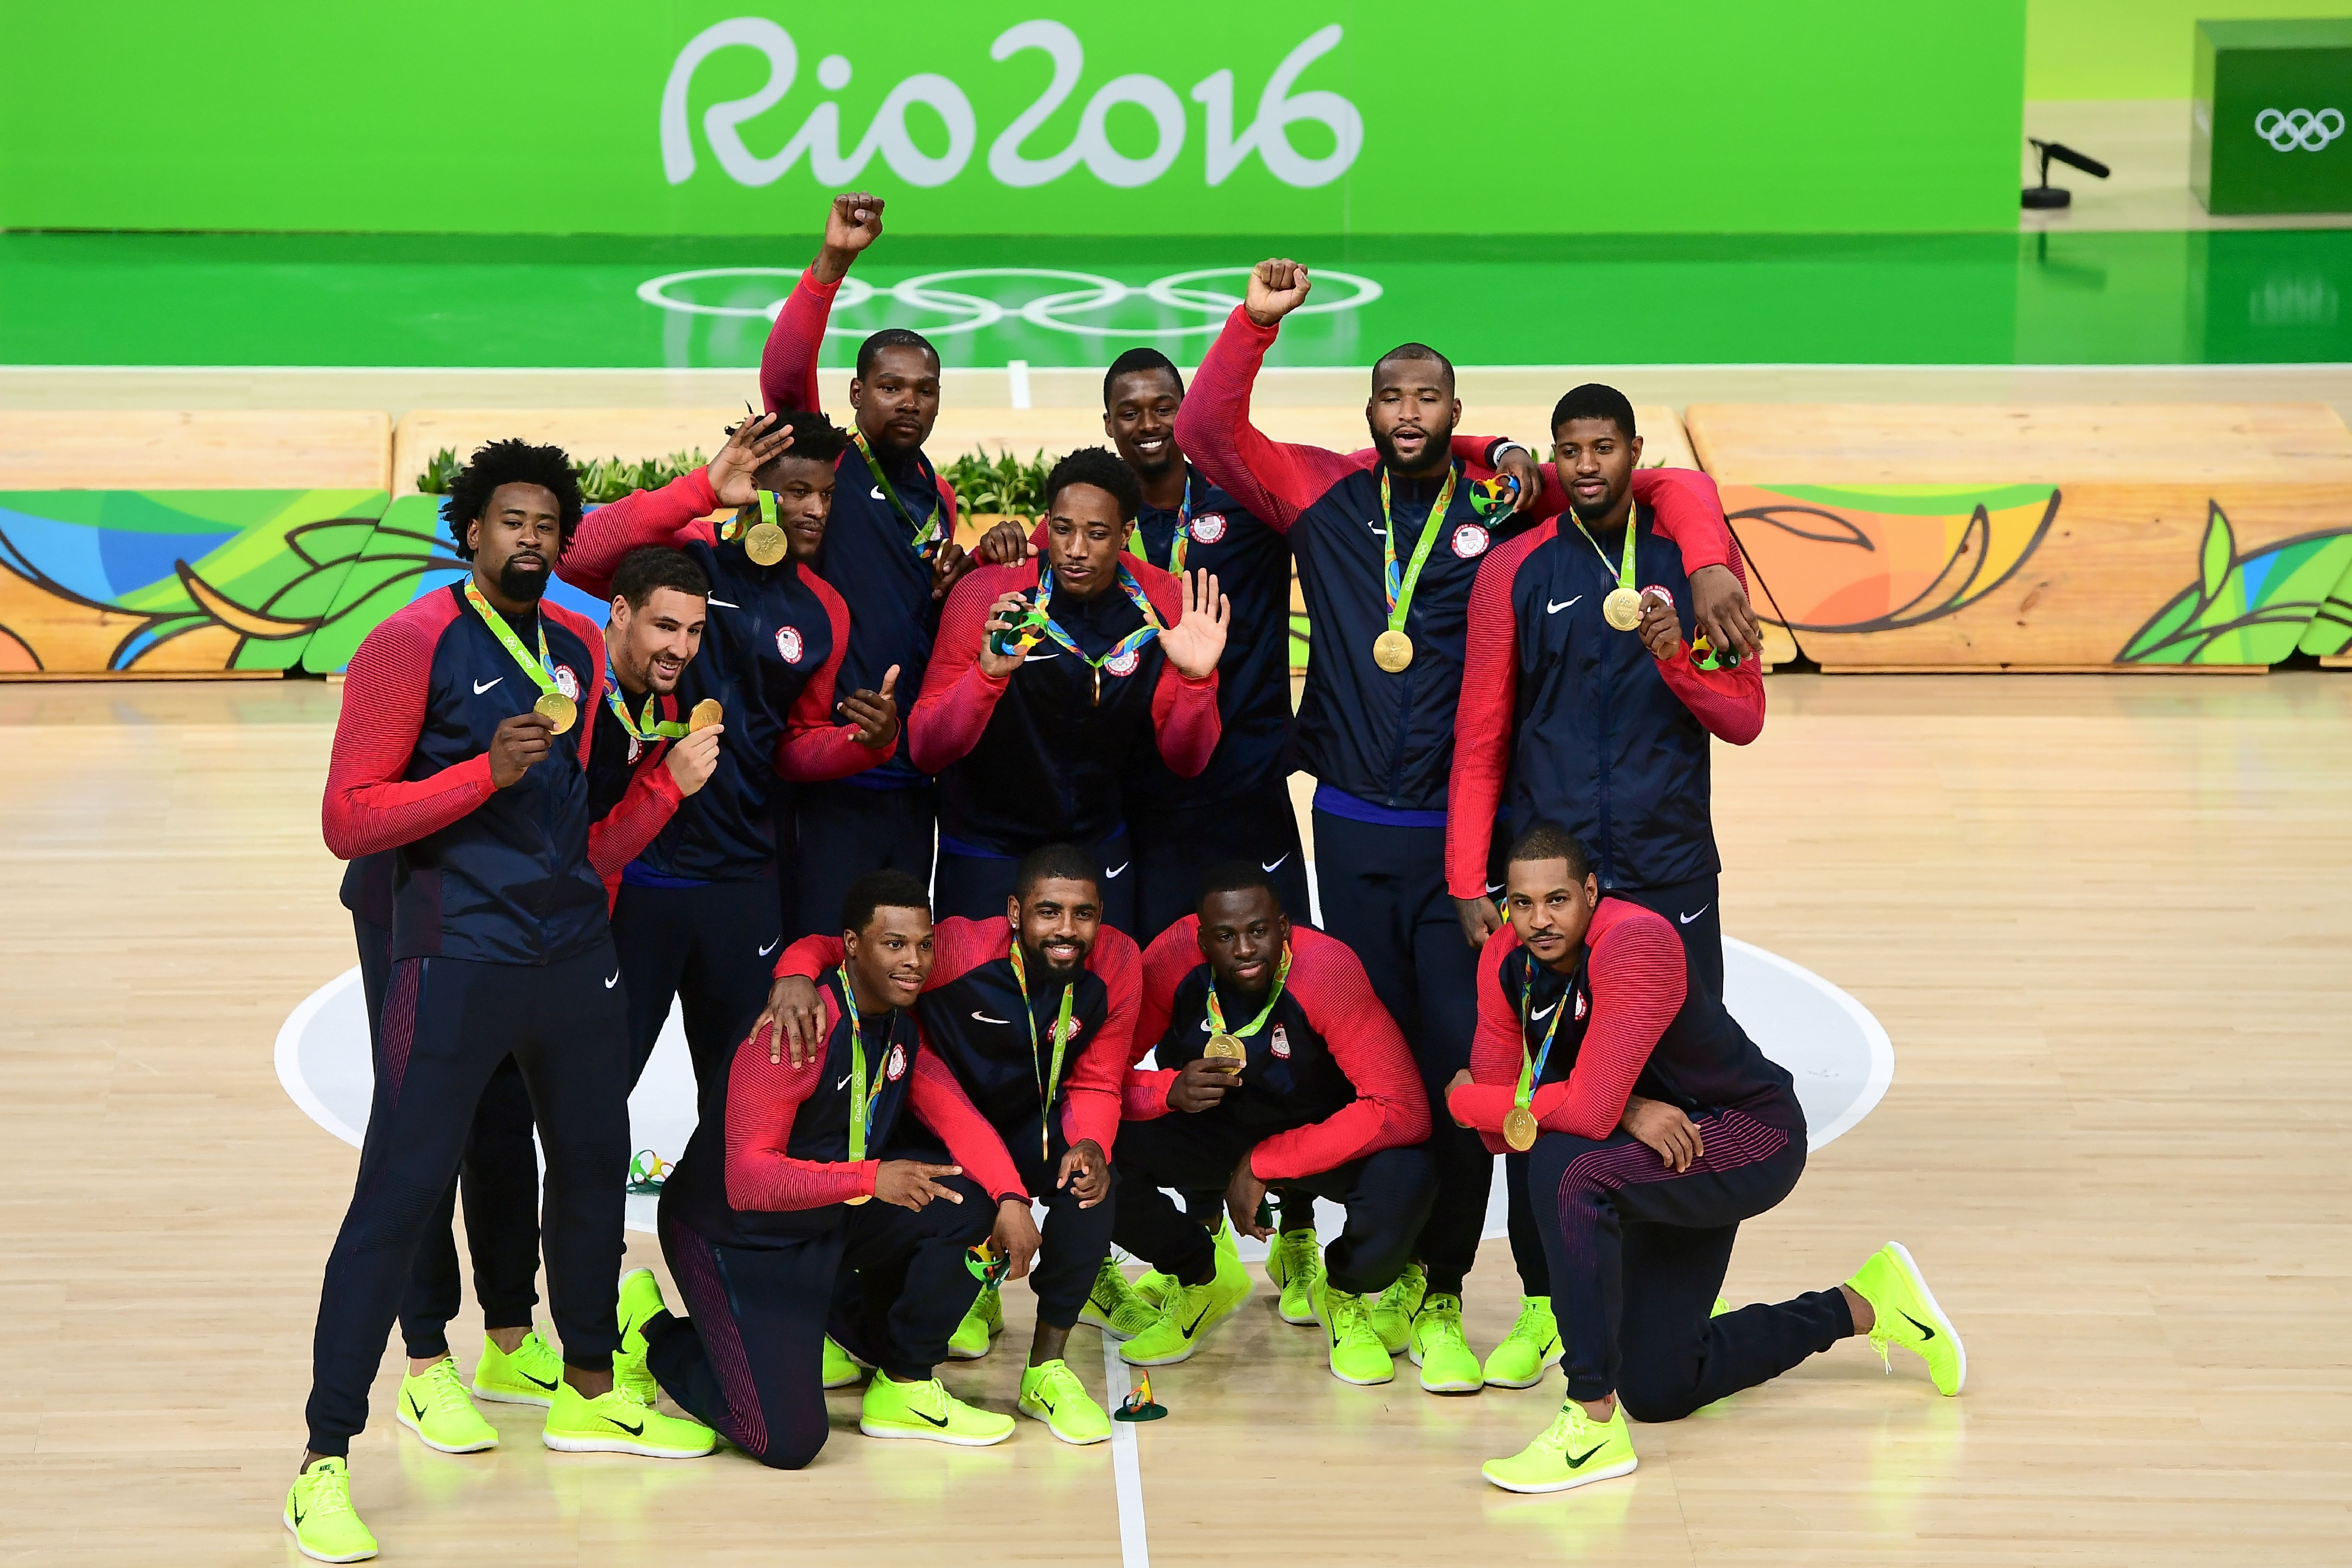 Rio Olympics Team Usa Medals American Athletes Winning Medals 16 Olympics